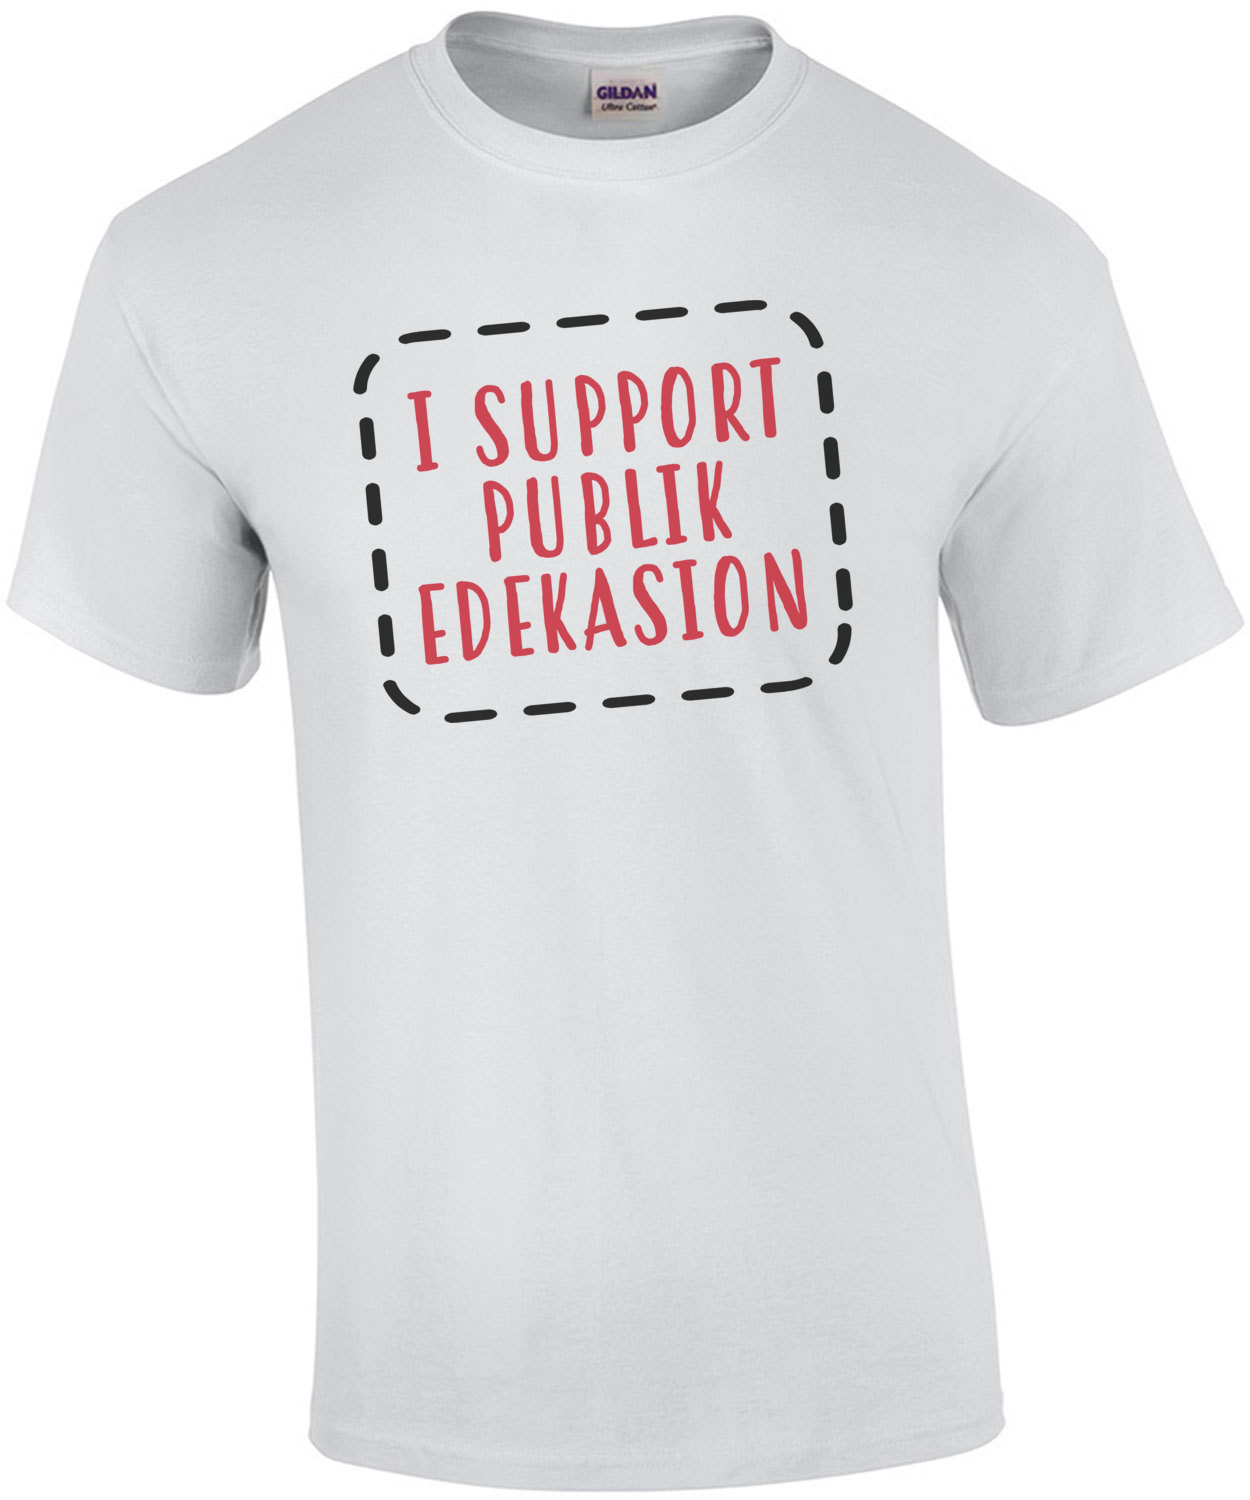 I Support Publik Edekasion T-Shirt